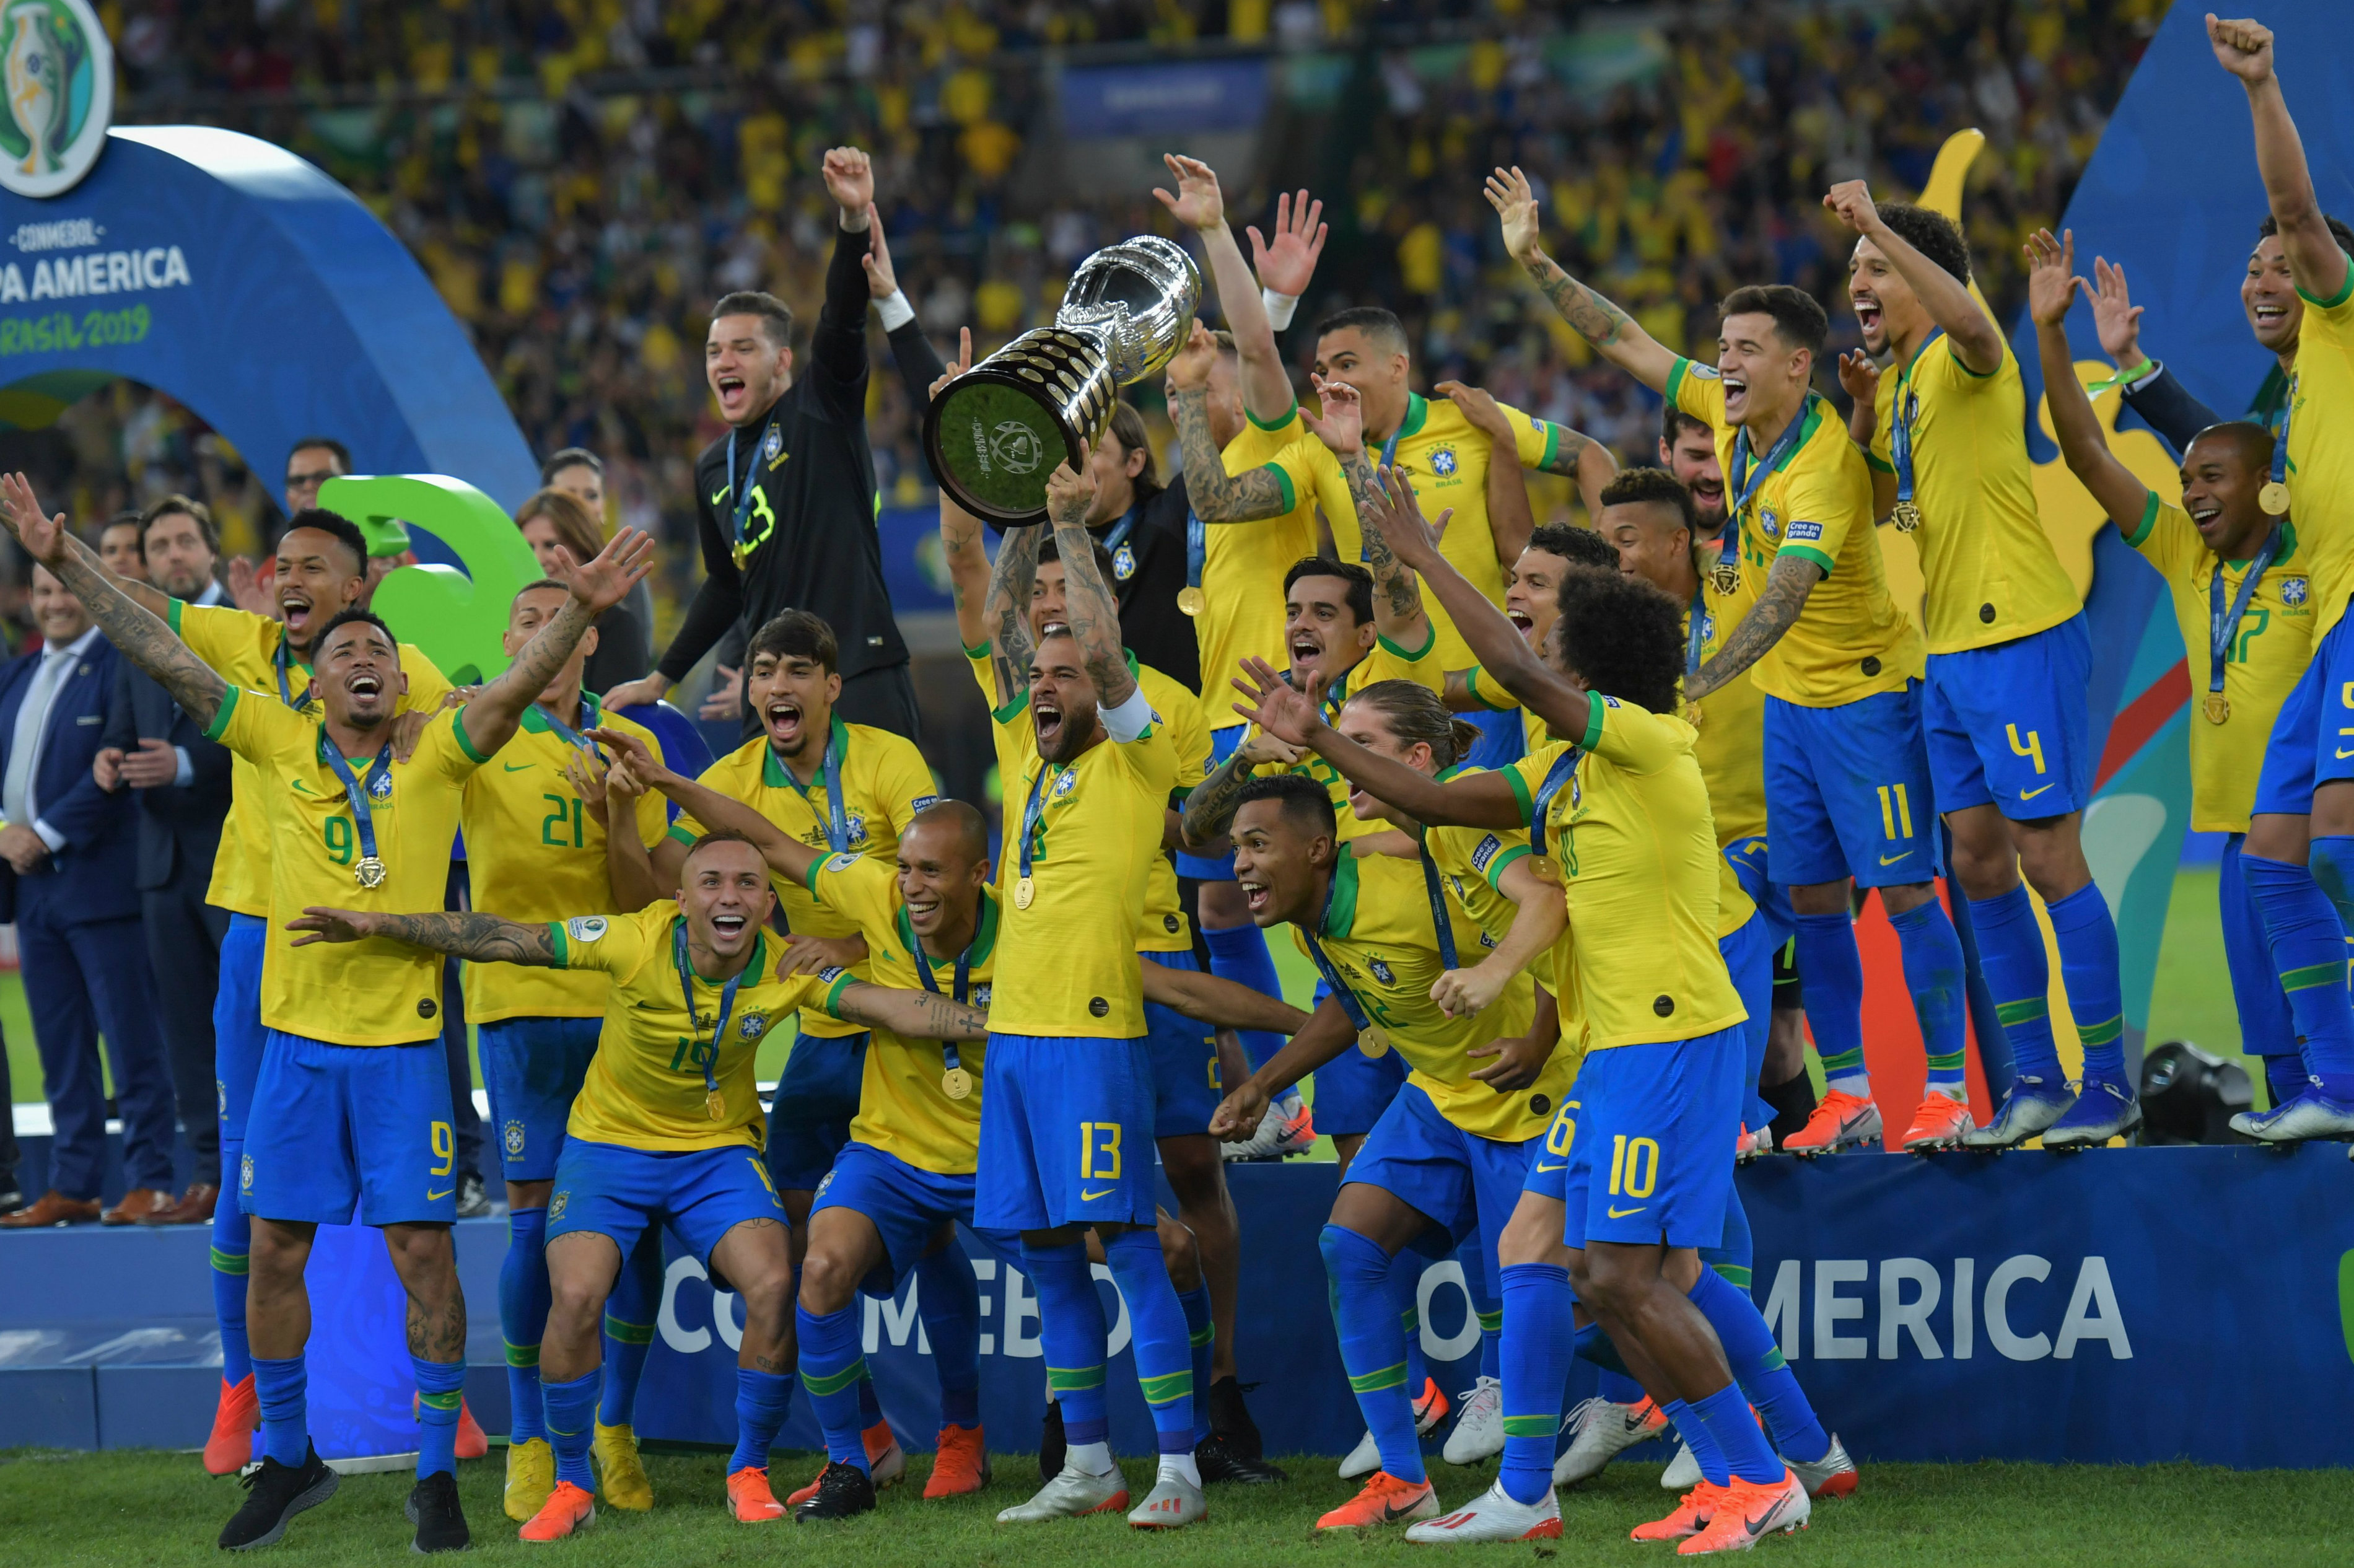 Brazil lift the 2019 Copa America trophy